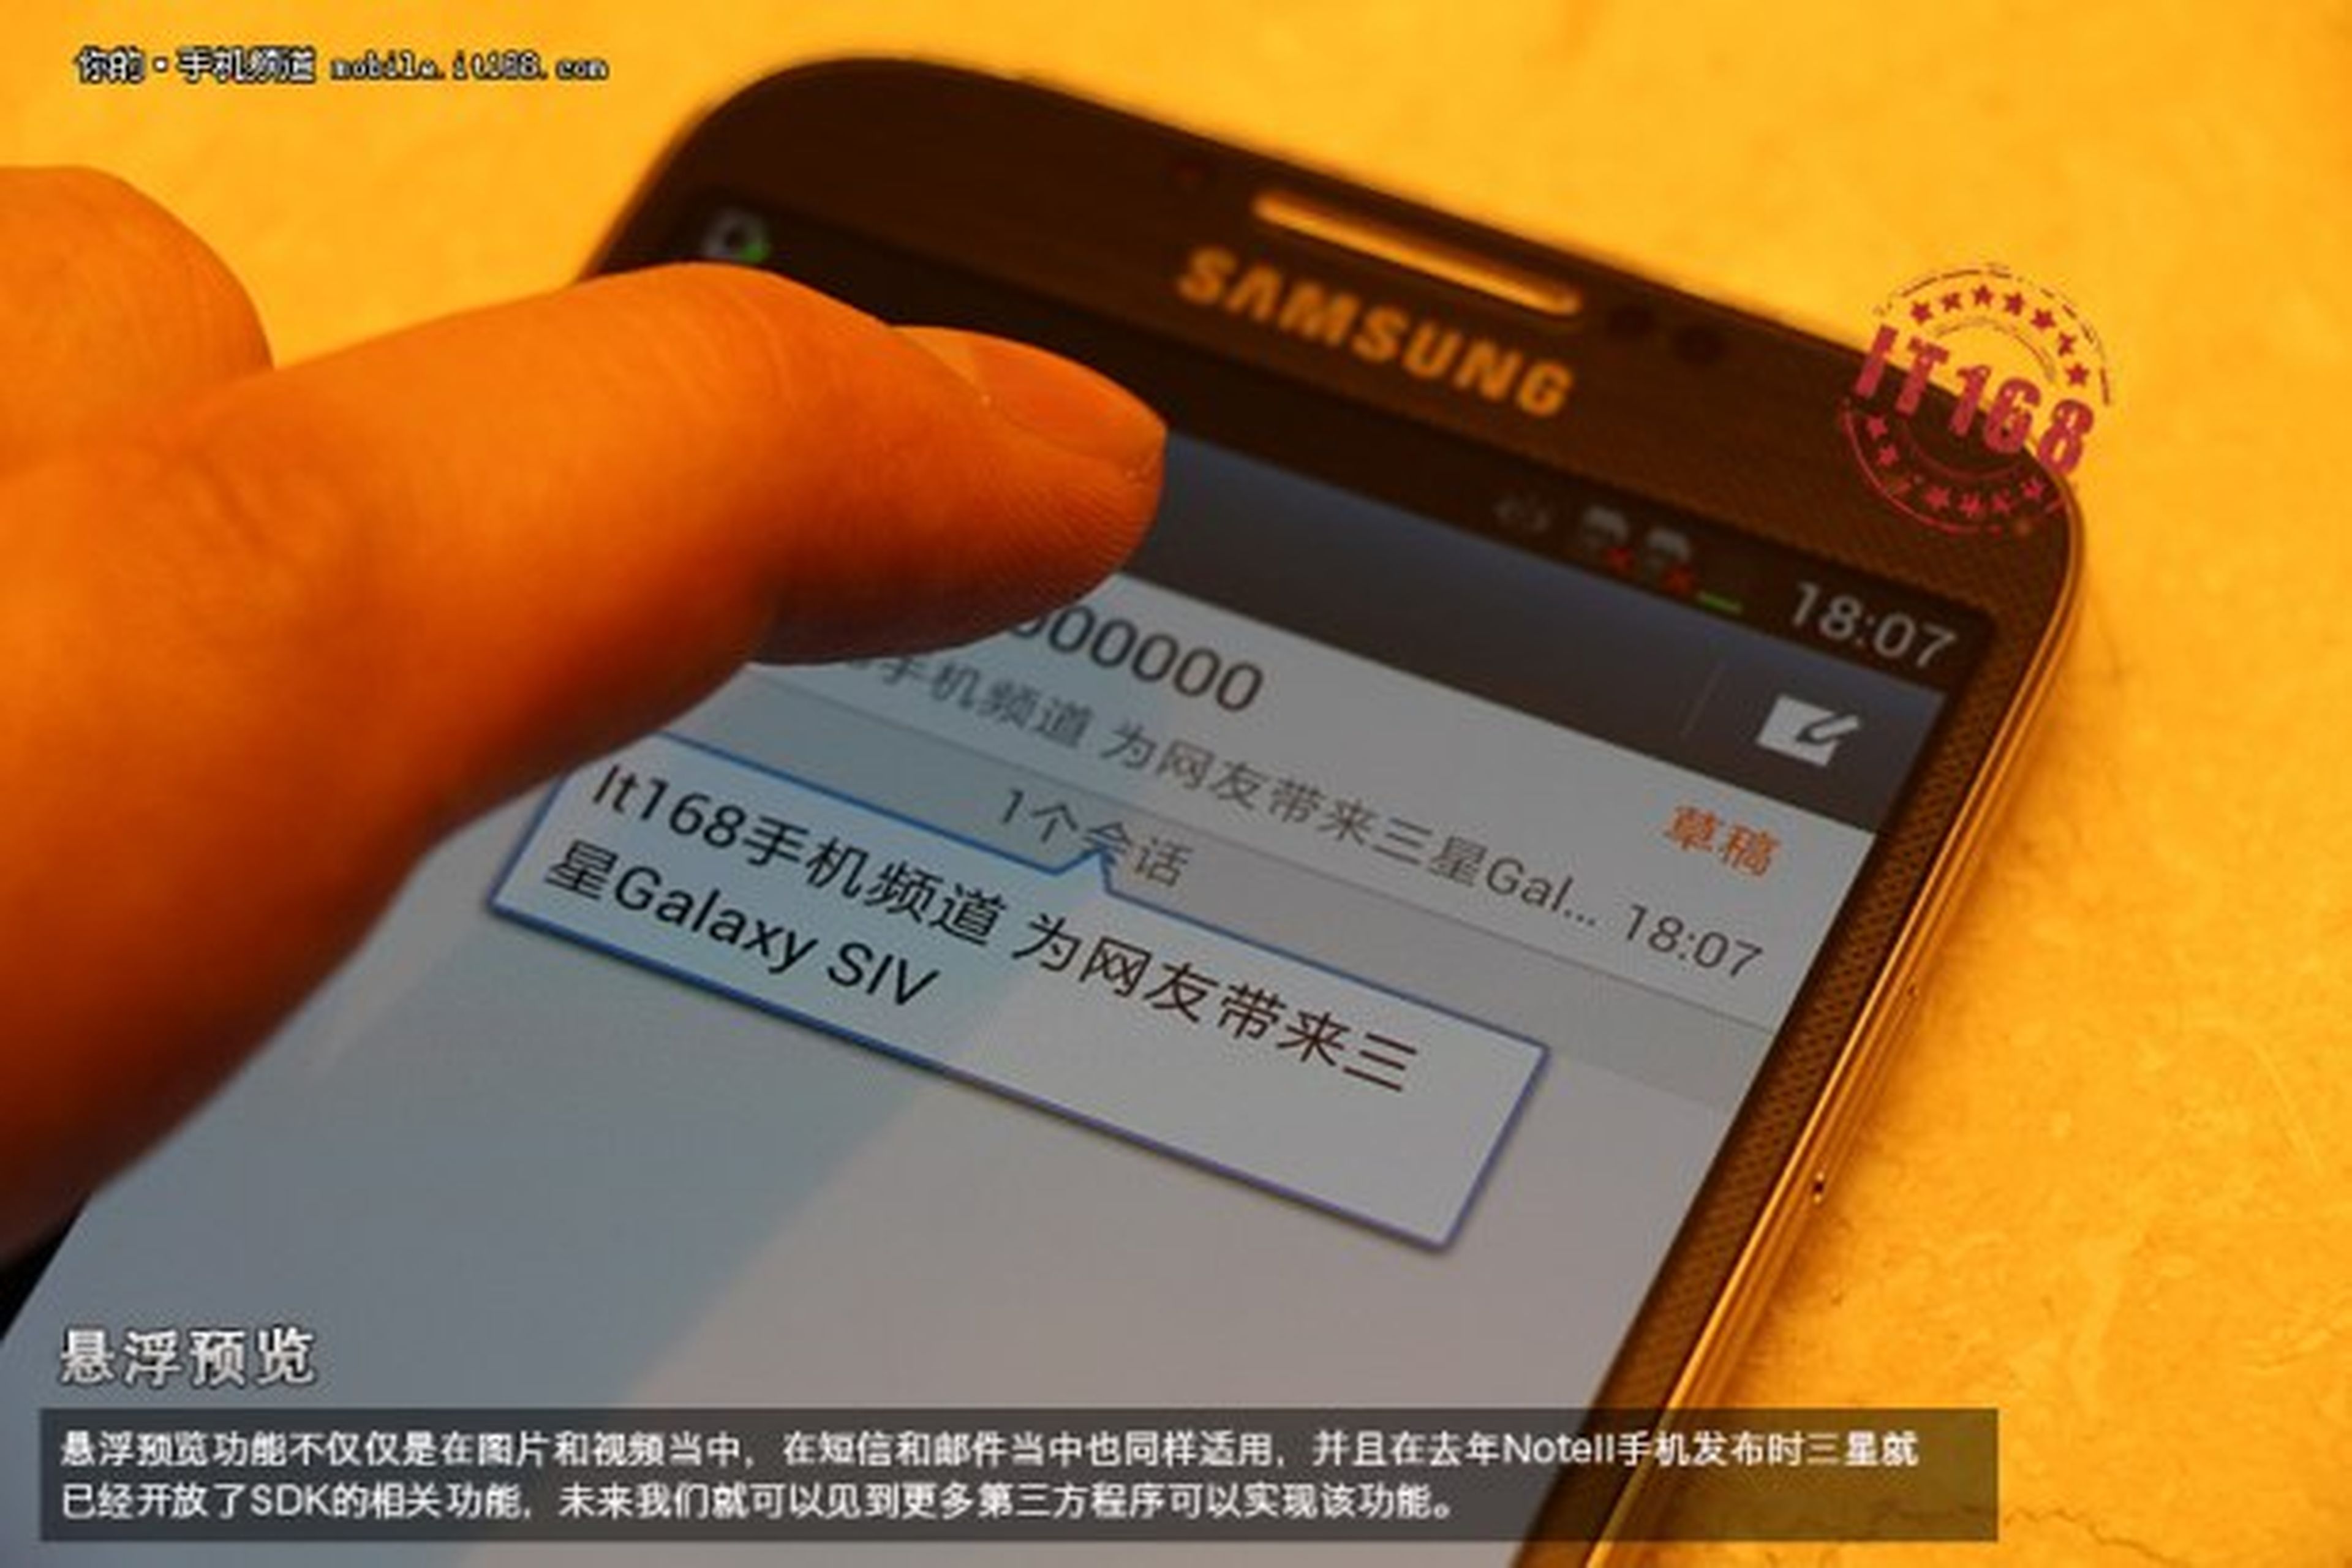 Samsung Galasy S4